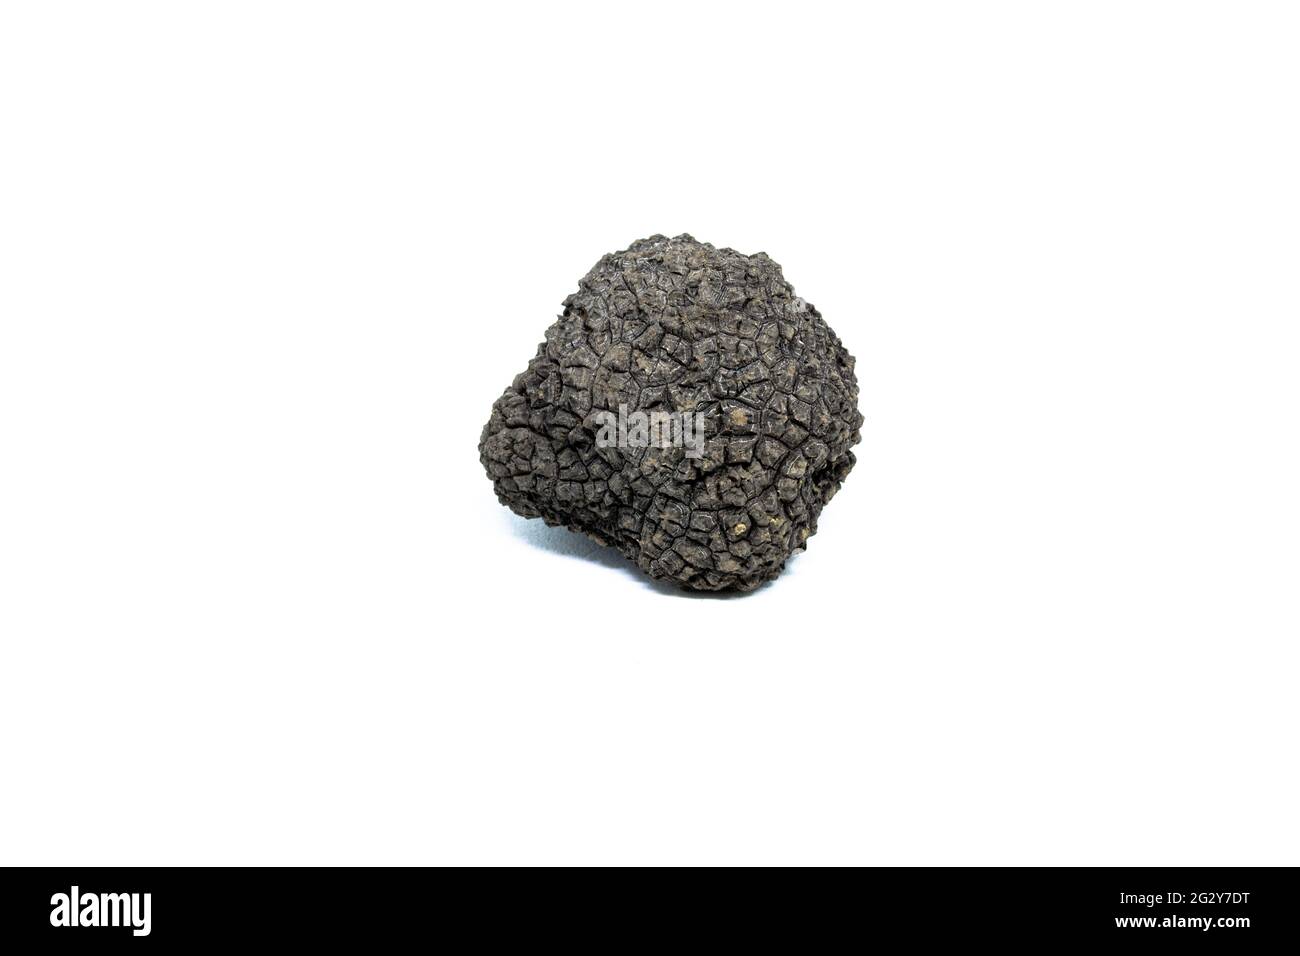 a single black truffle, tuber aestivum, photographed on a white background Stock Photo